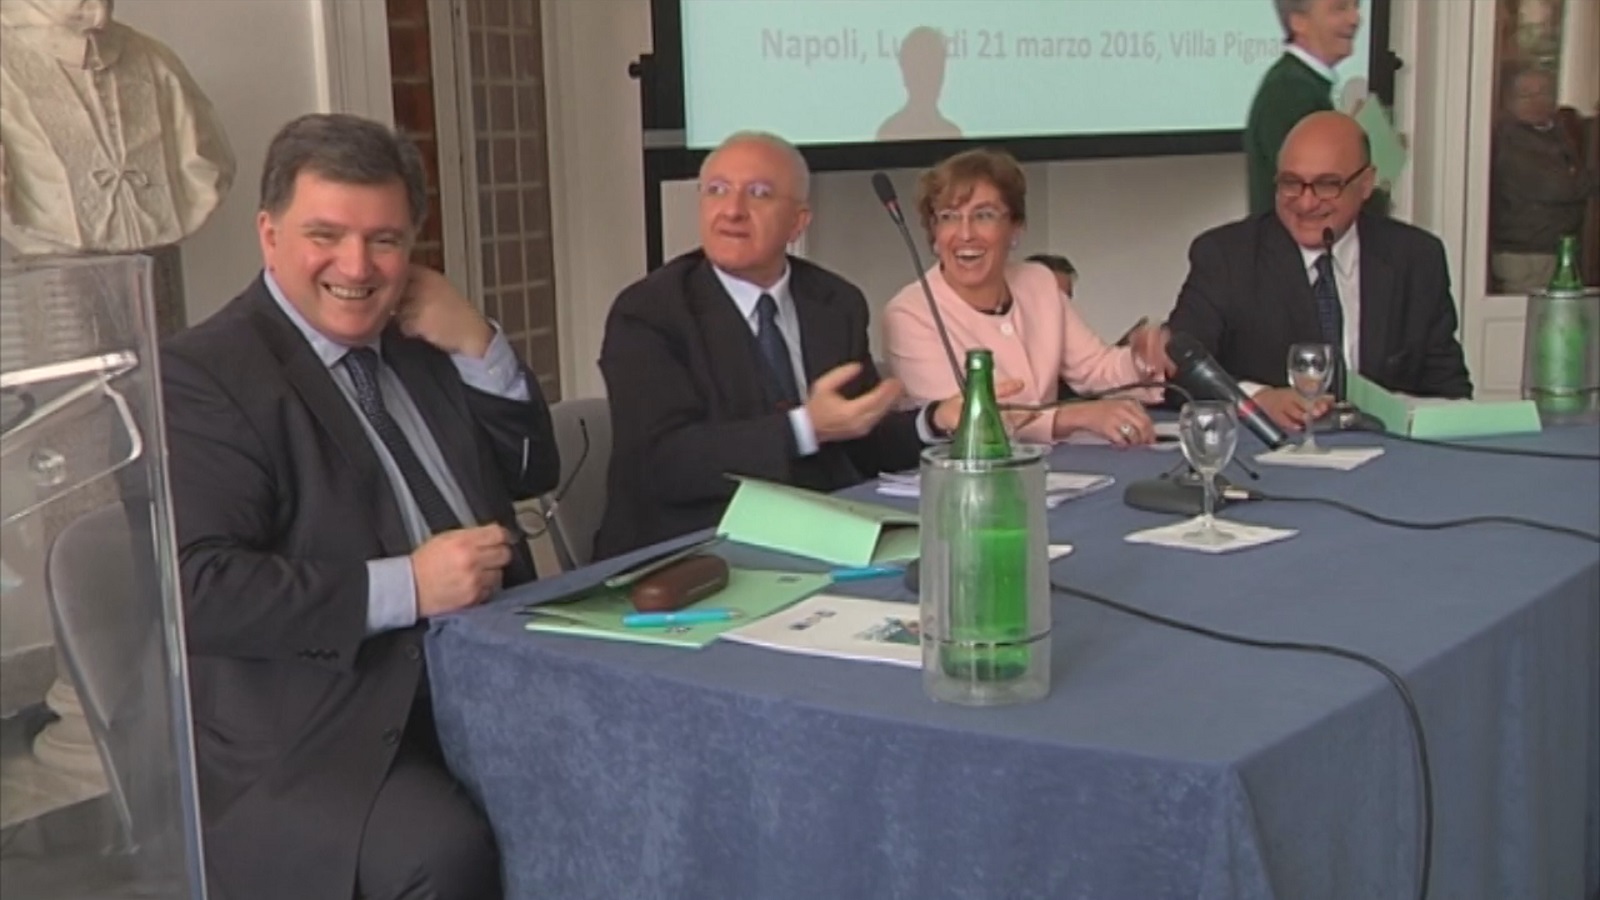 Fondi Por-Fesr 2014-2020, De Luca: ultima chance per la Campania